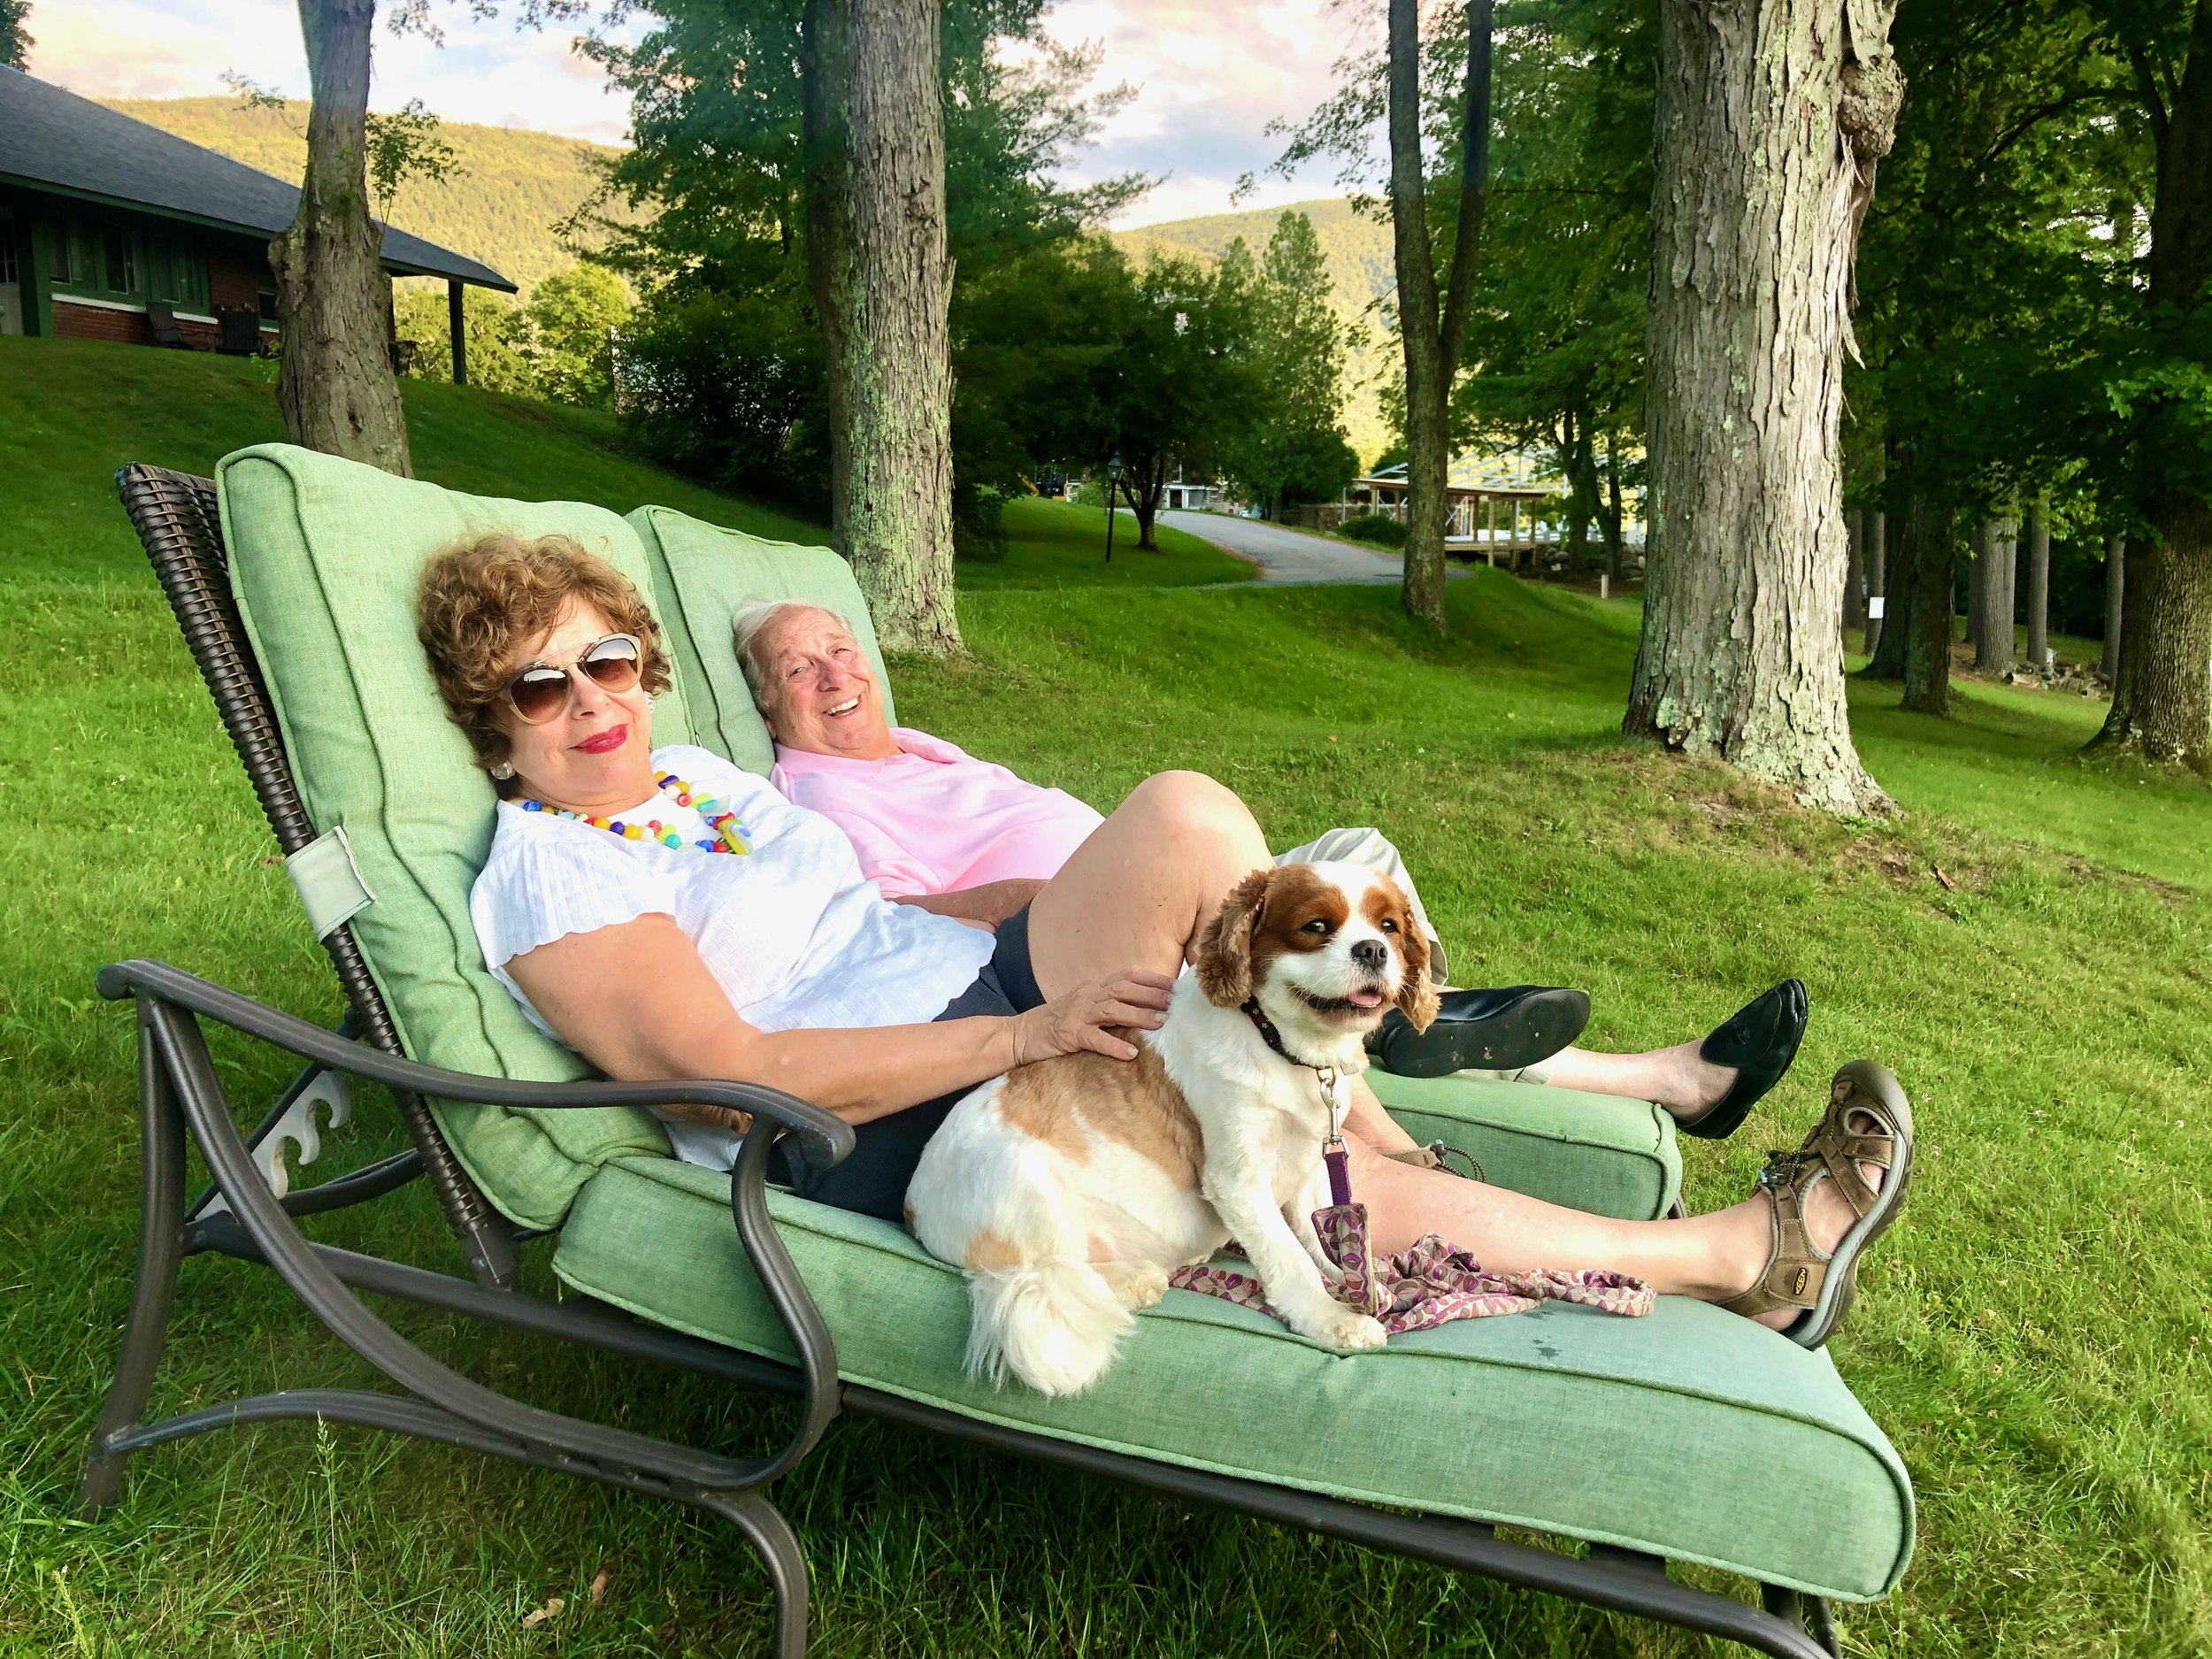 grandparents and dog summer fun.jpeg